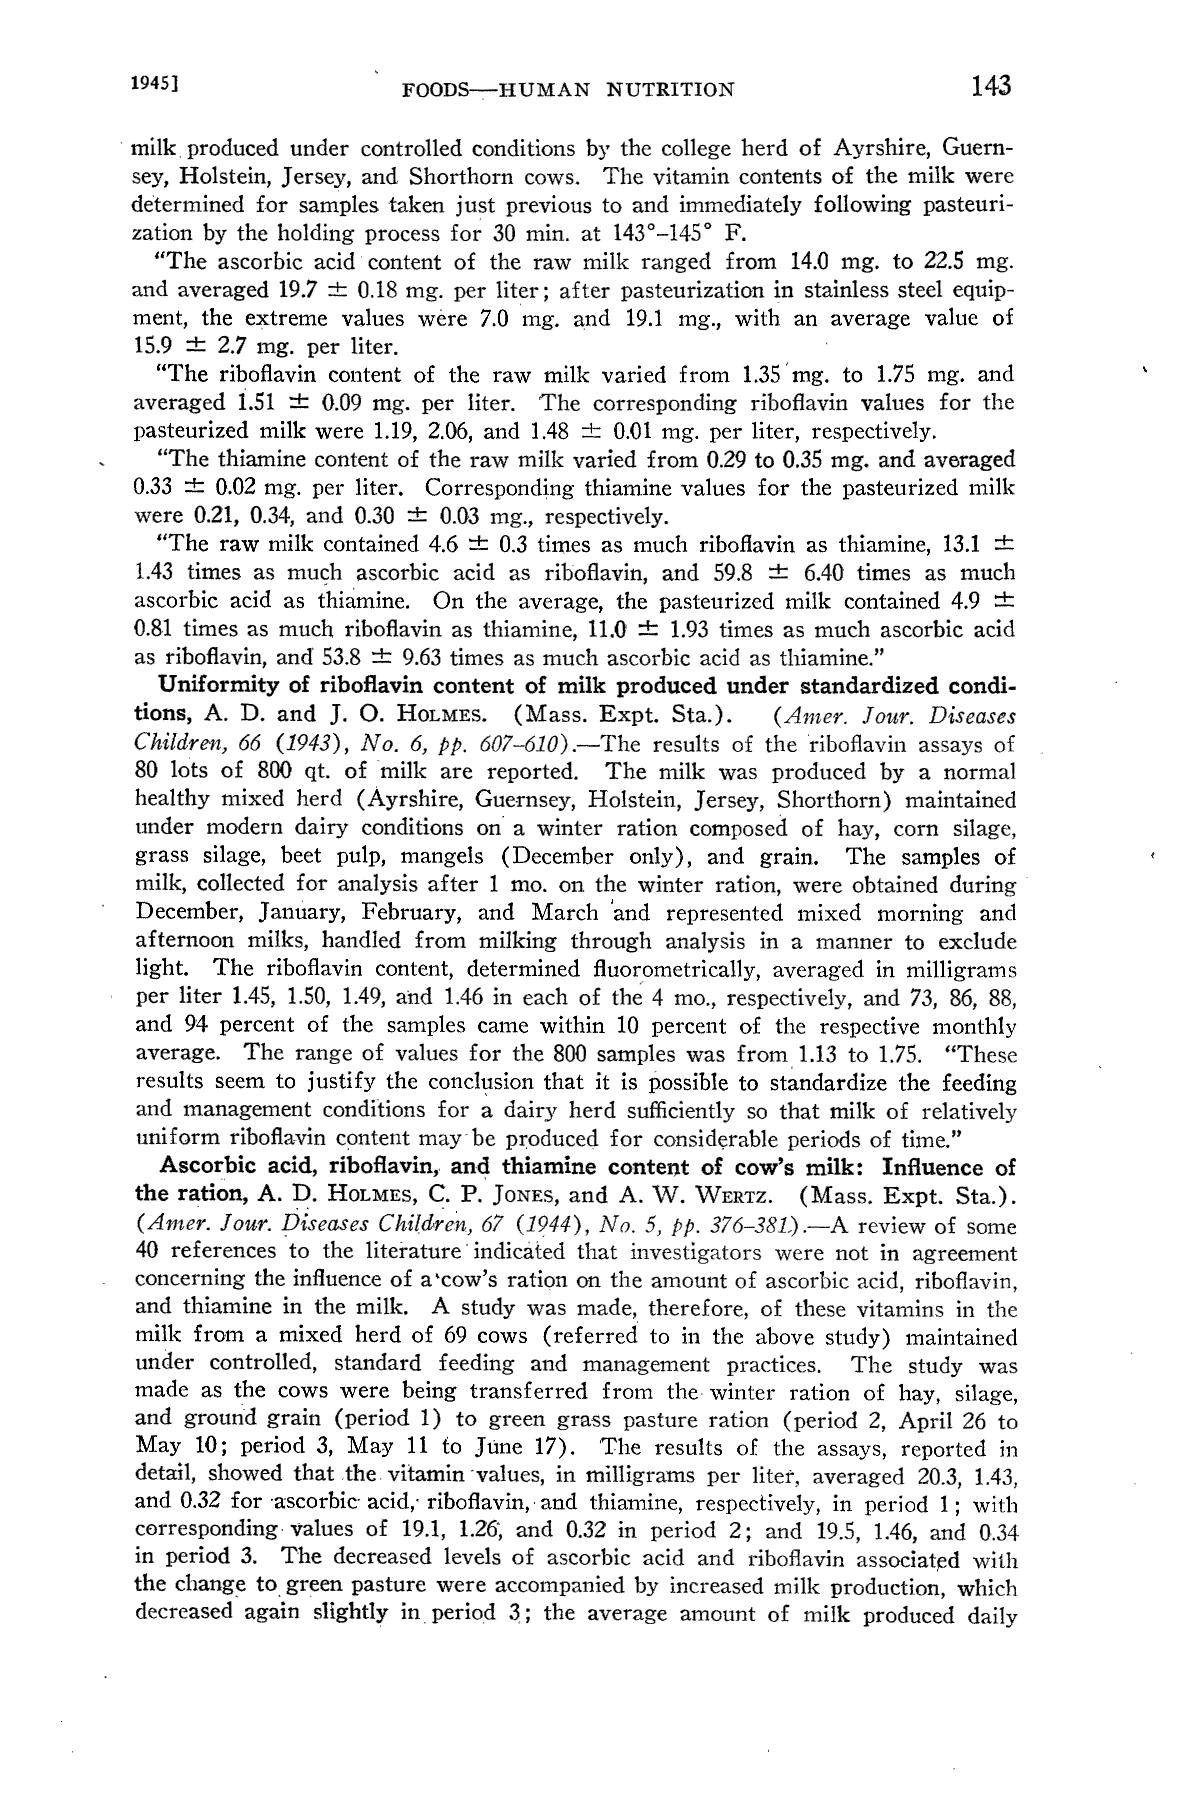 Experiment Station Record, Volume 92, January-June, 1945
                                                
                                                    143
                                                